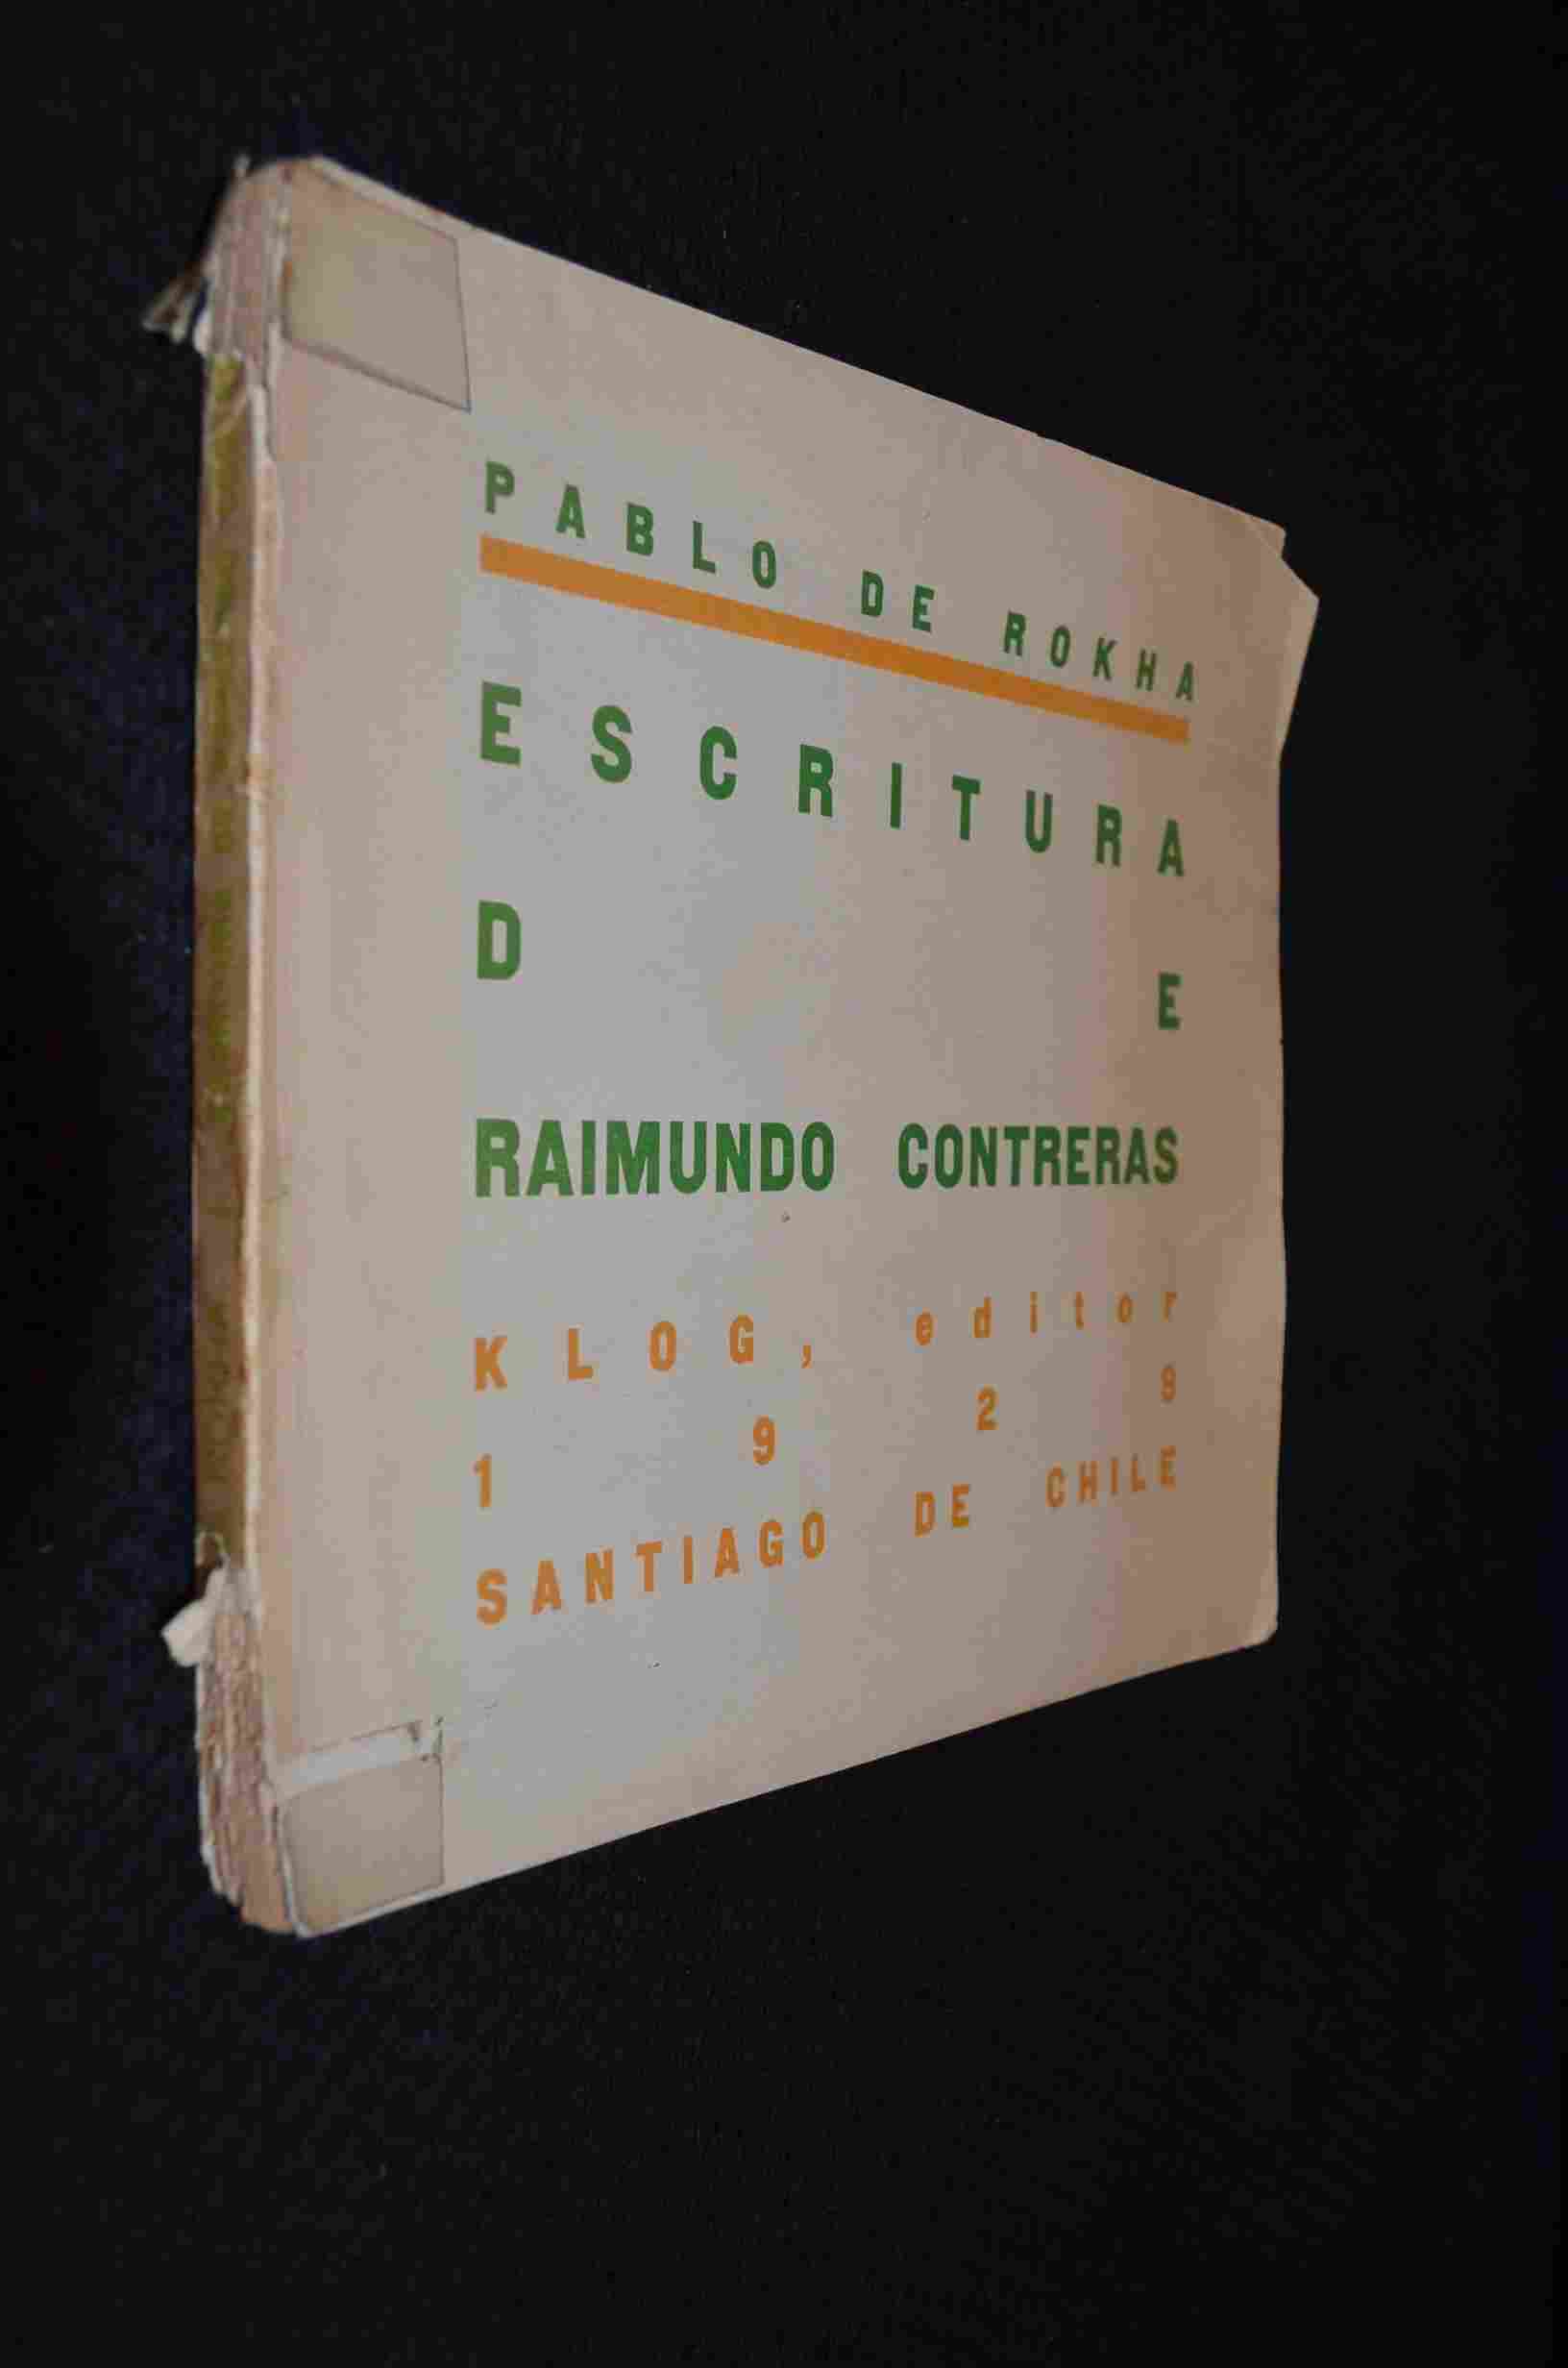 Pablo de Rokha - Escritura de Raimundo Contreras